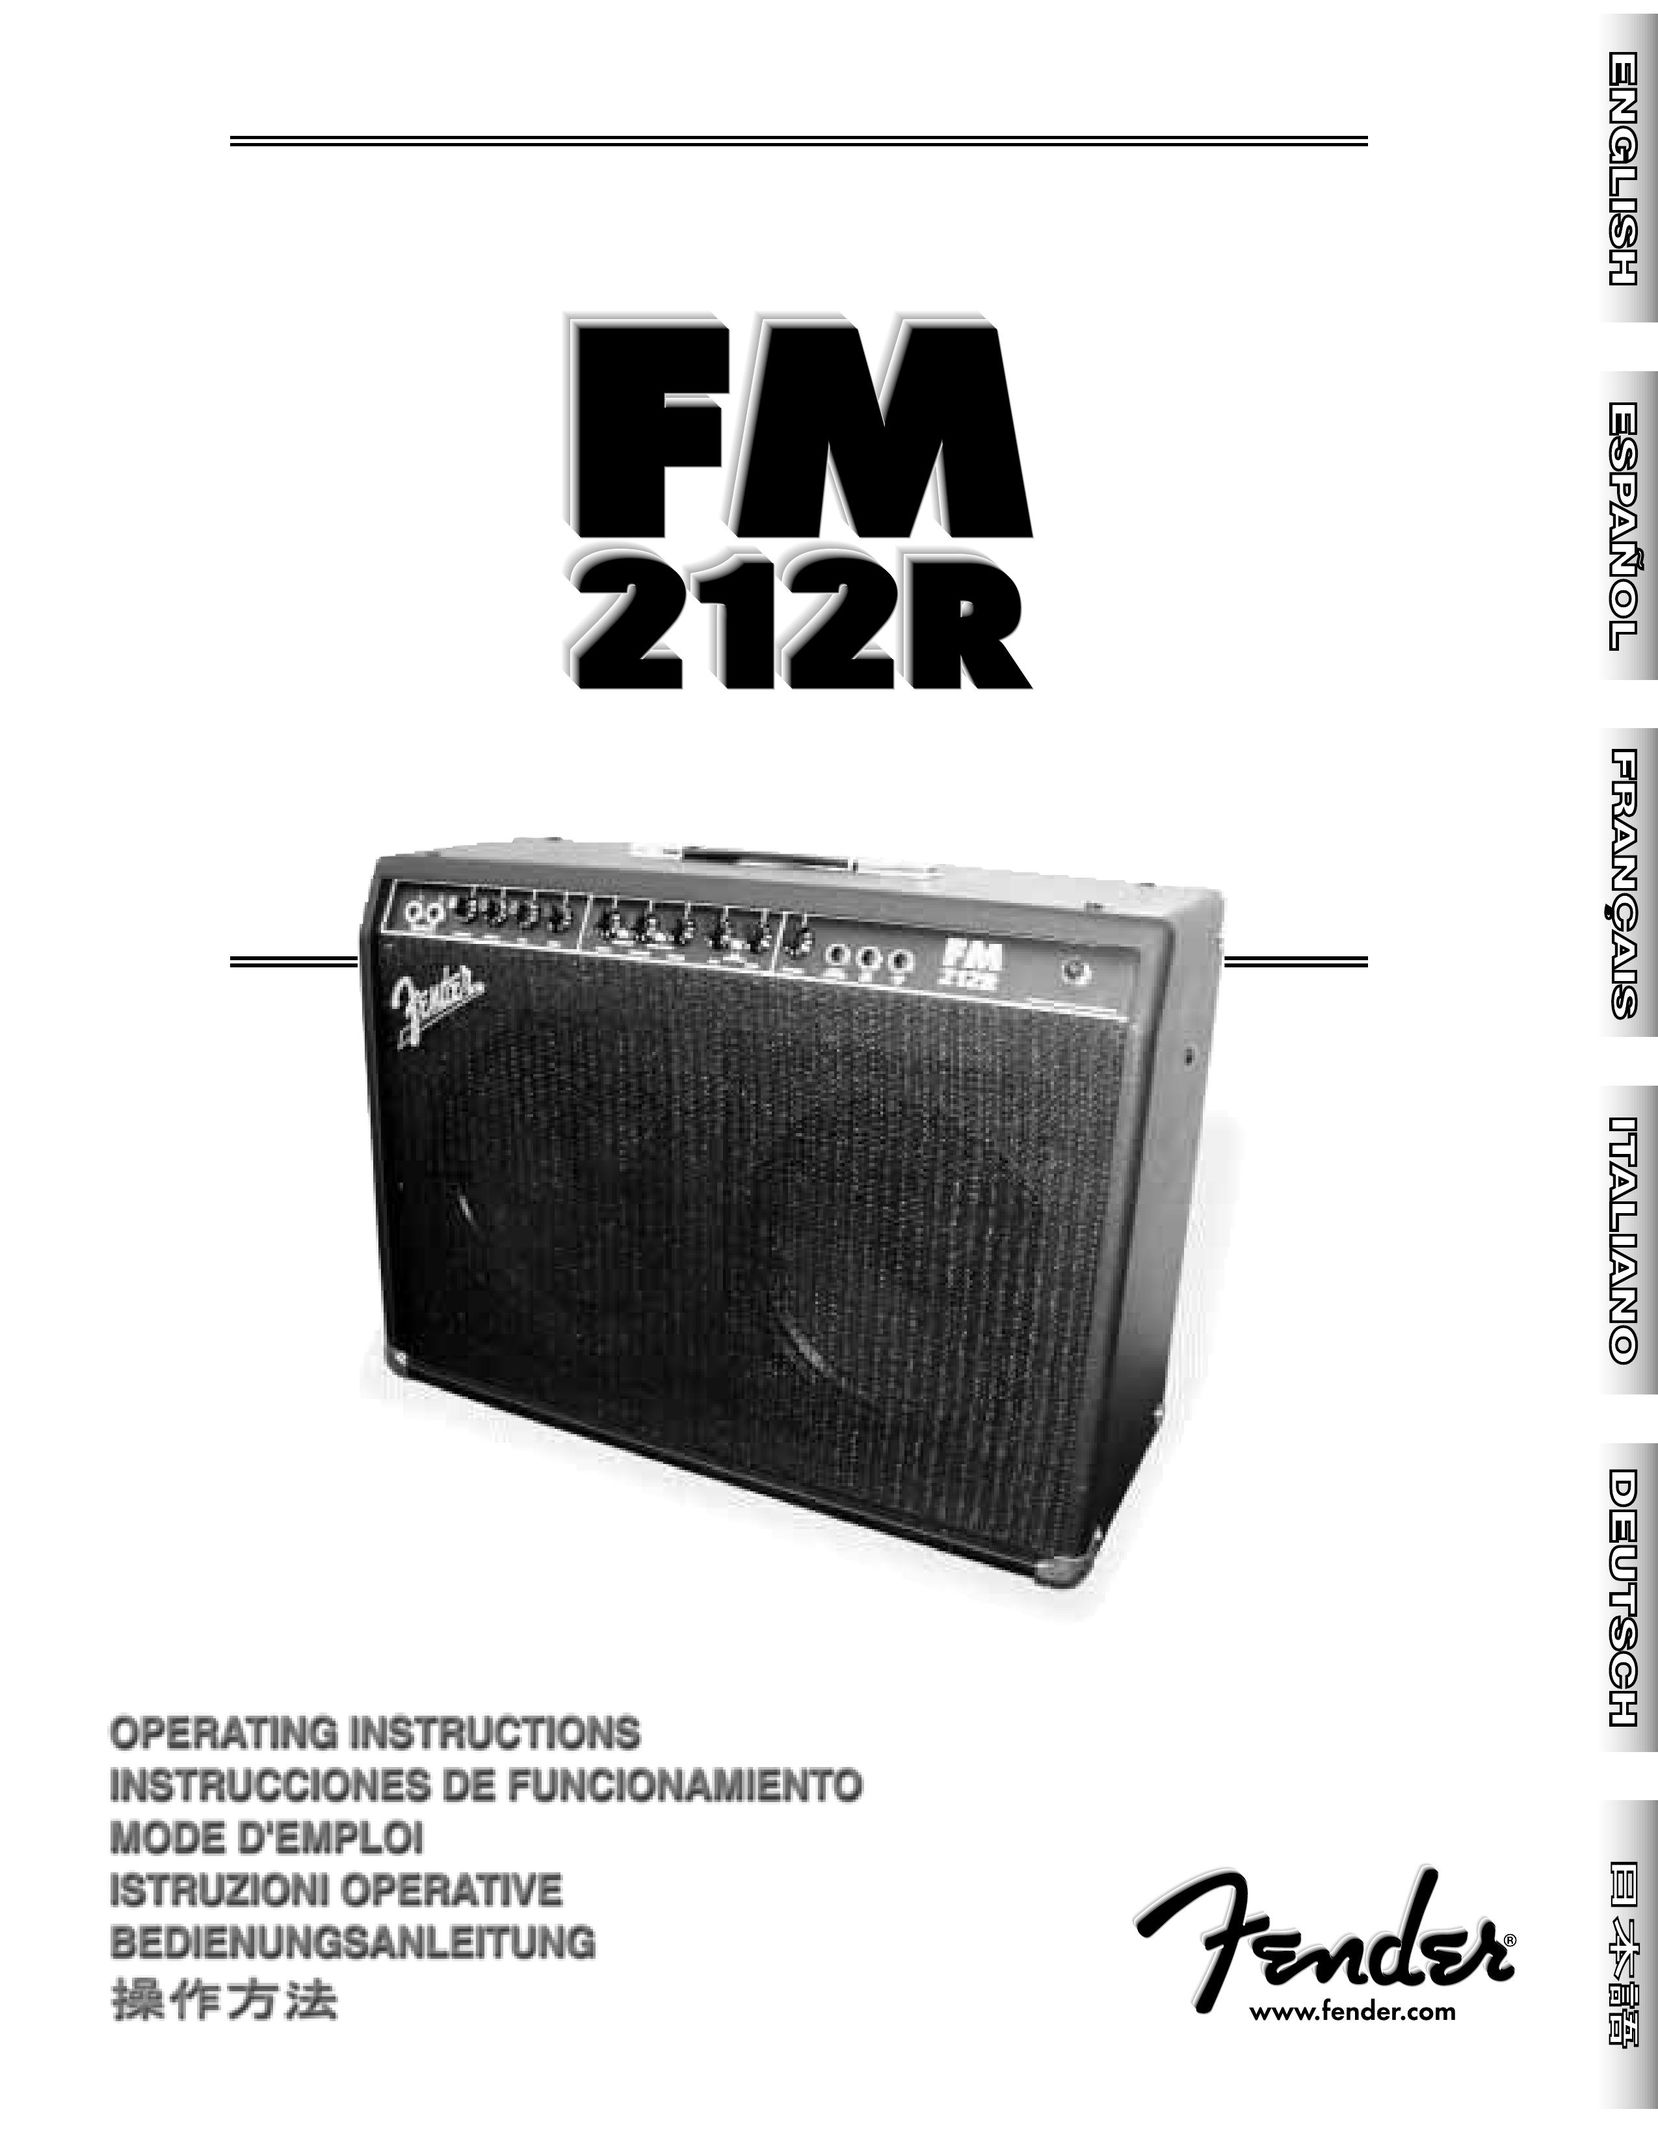 Fender 212R Radio User Manual